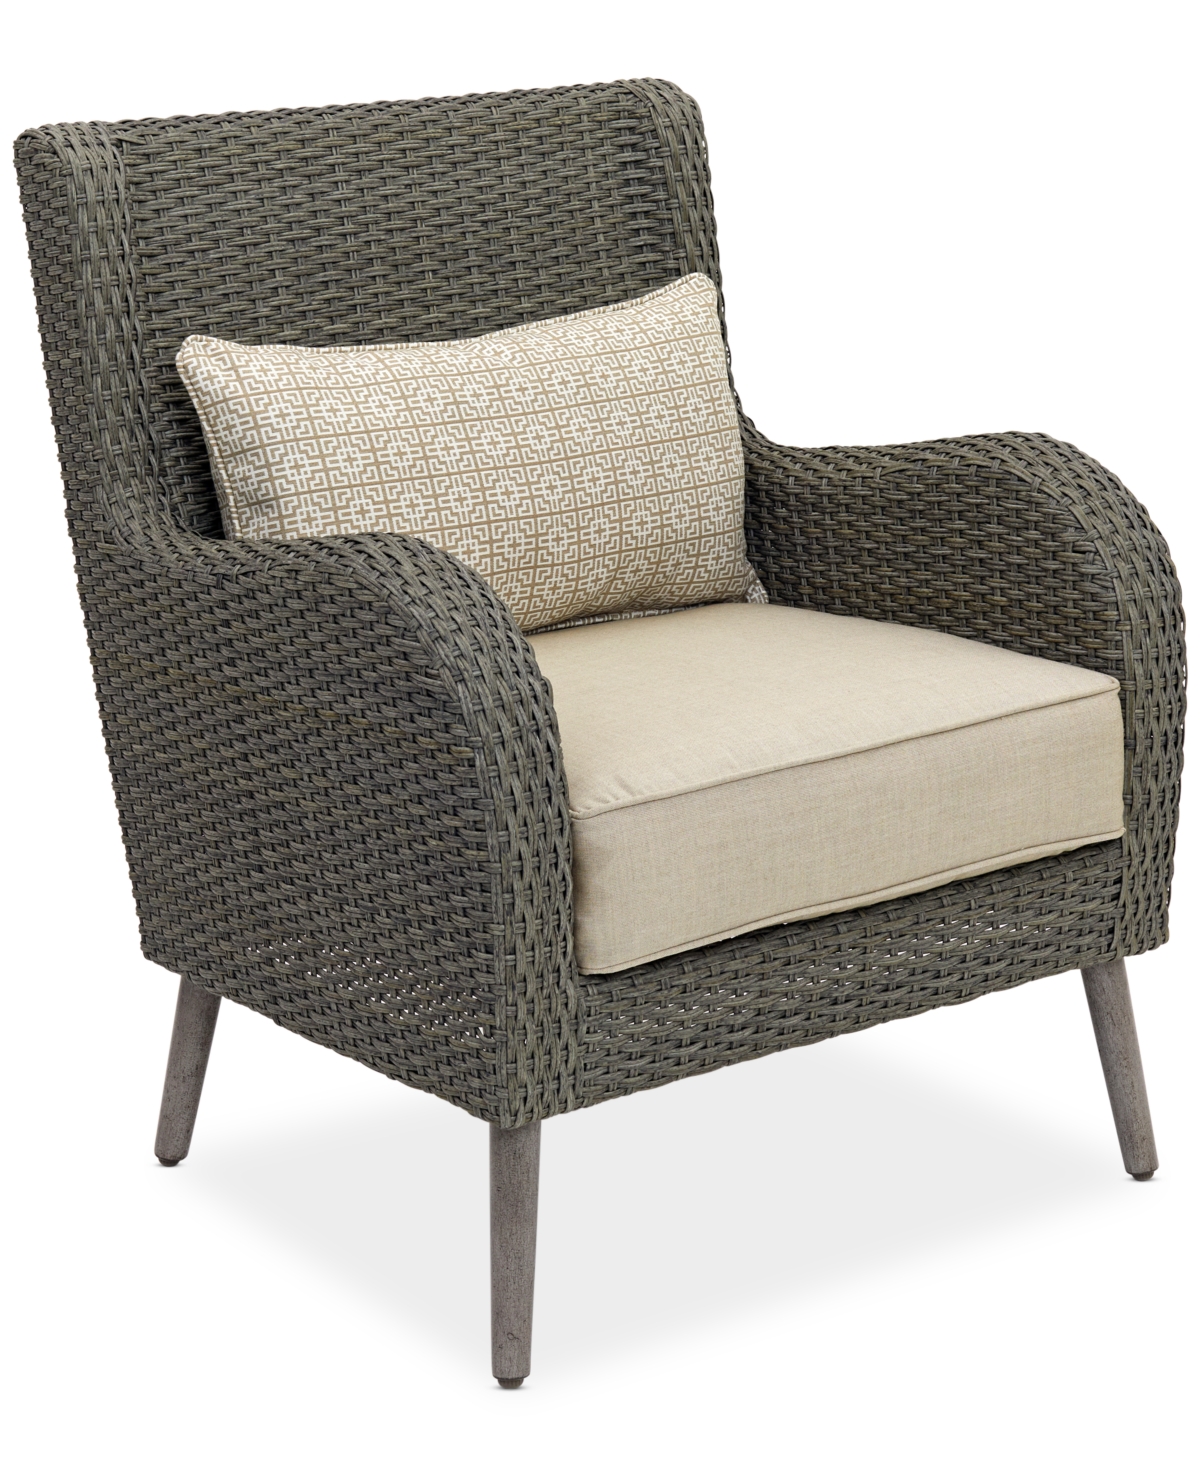 Agio Clarksville Outdoor Lounge Chair In Z Woven Sunblock Khaki